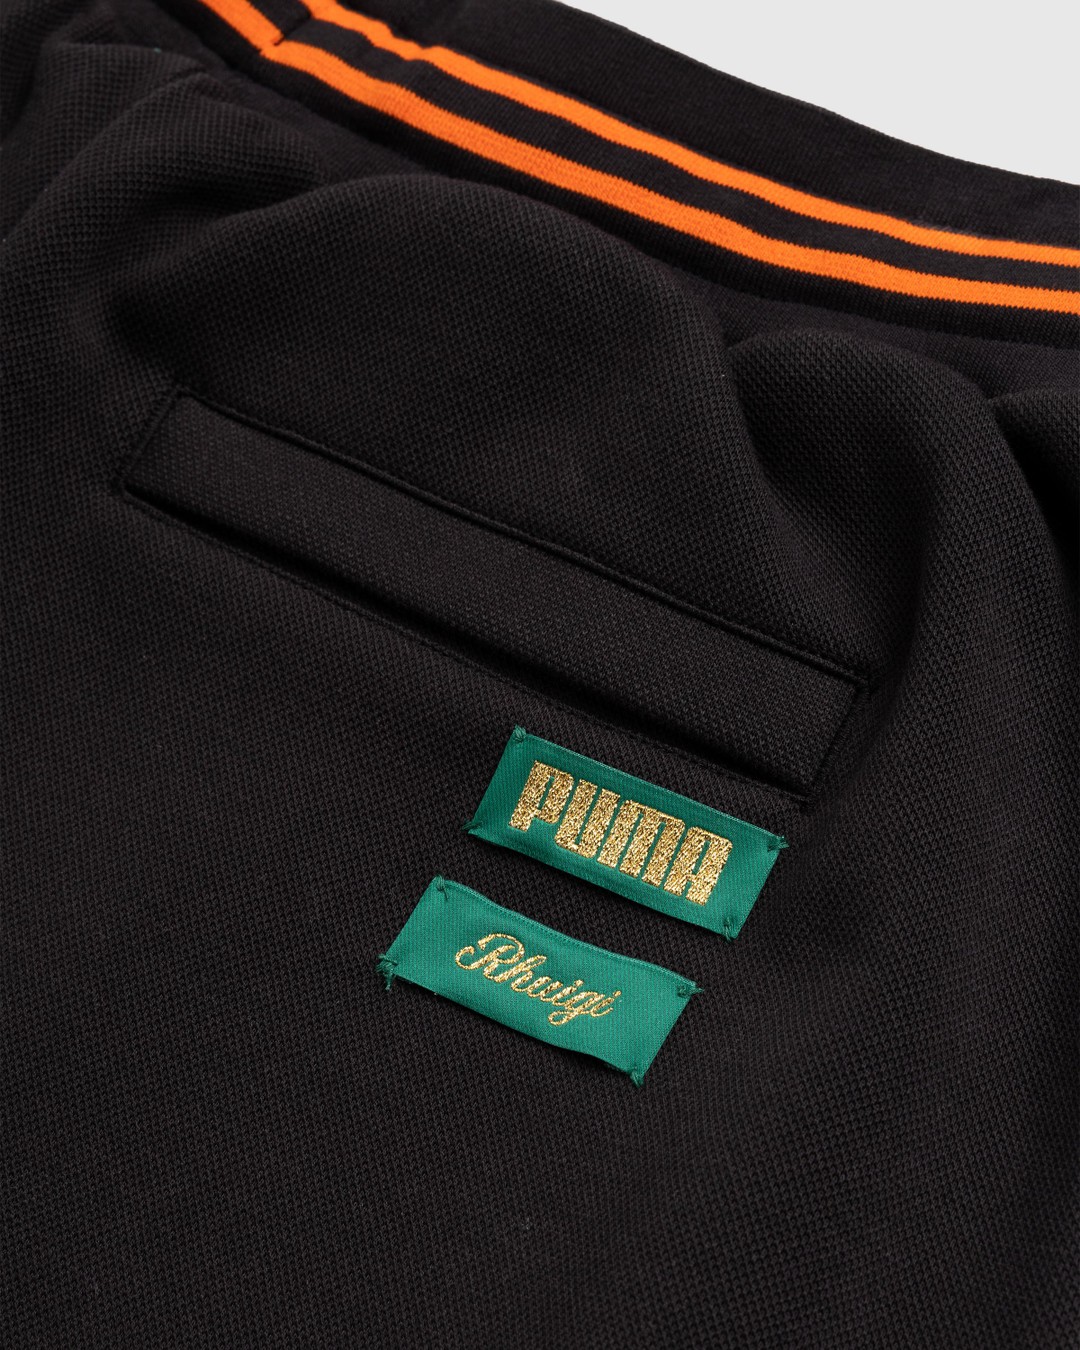 Puma x Rhuigi – Basketball Shorts Black - Shorts - Black - Image 5